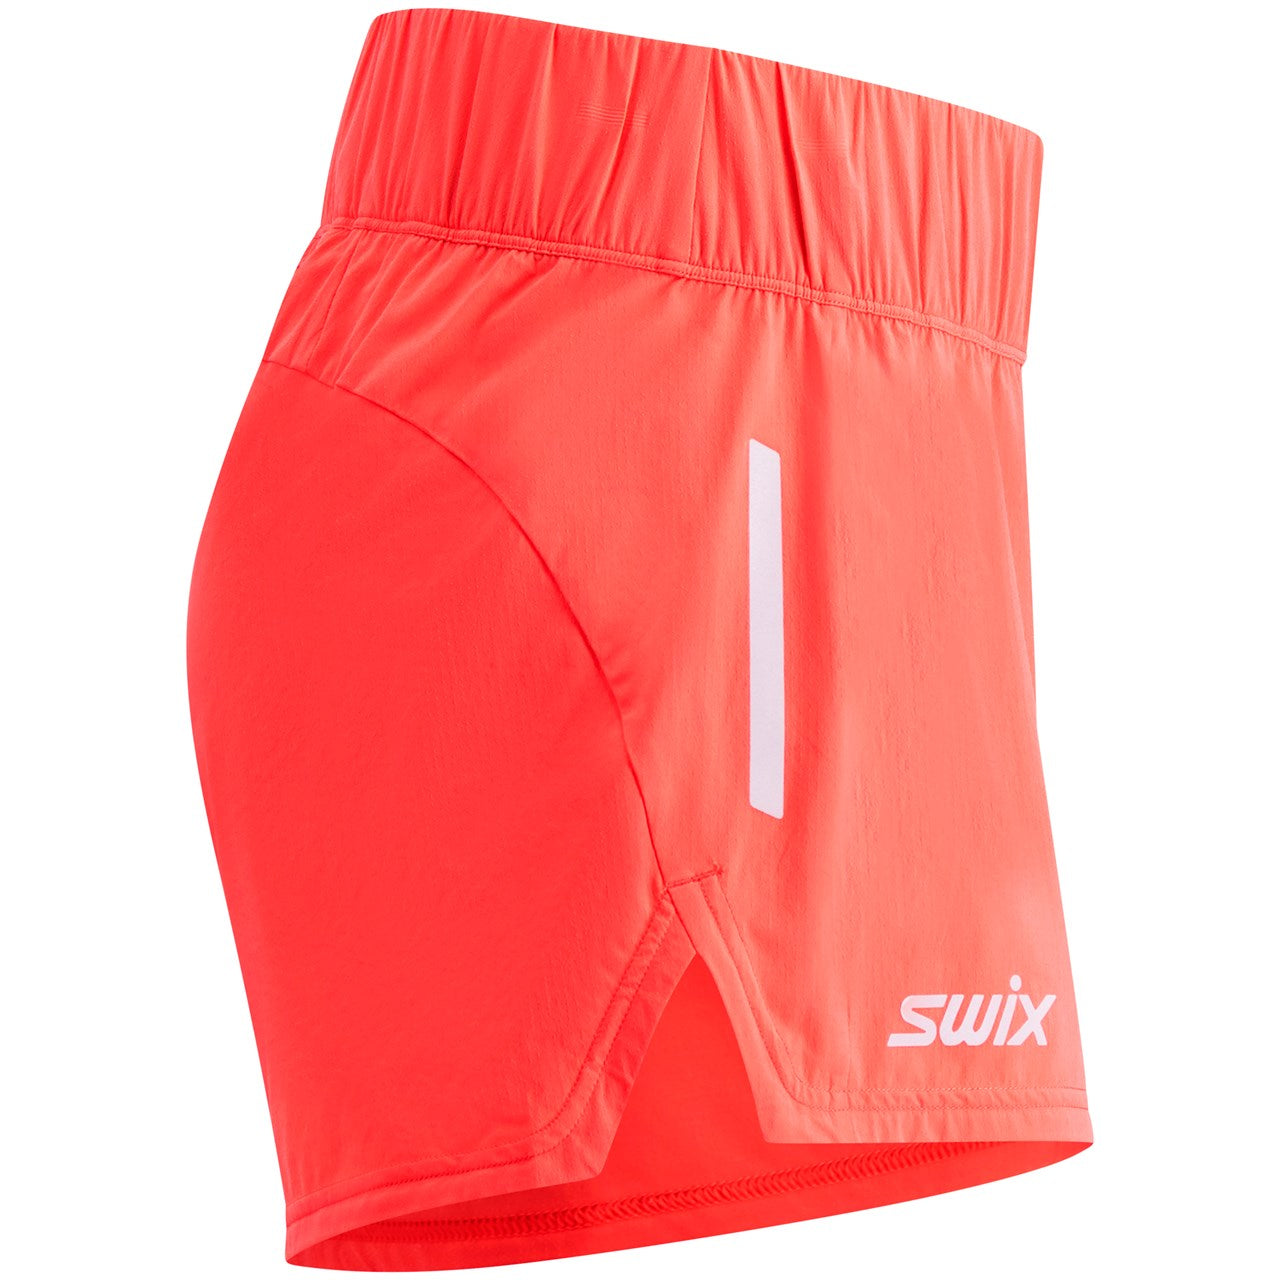 SWIX - PACE - Women's LIGHT SHORTS - SWIX SUMMER CLOTHING